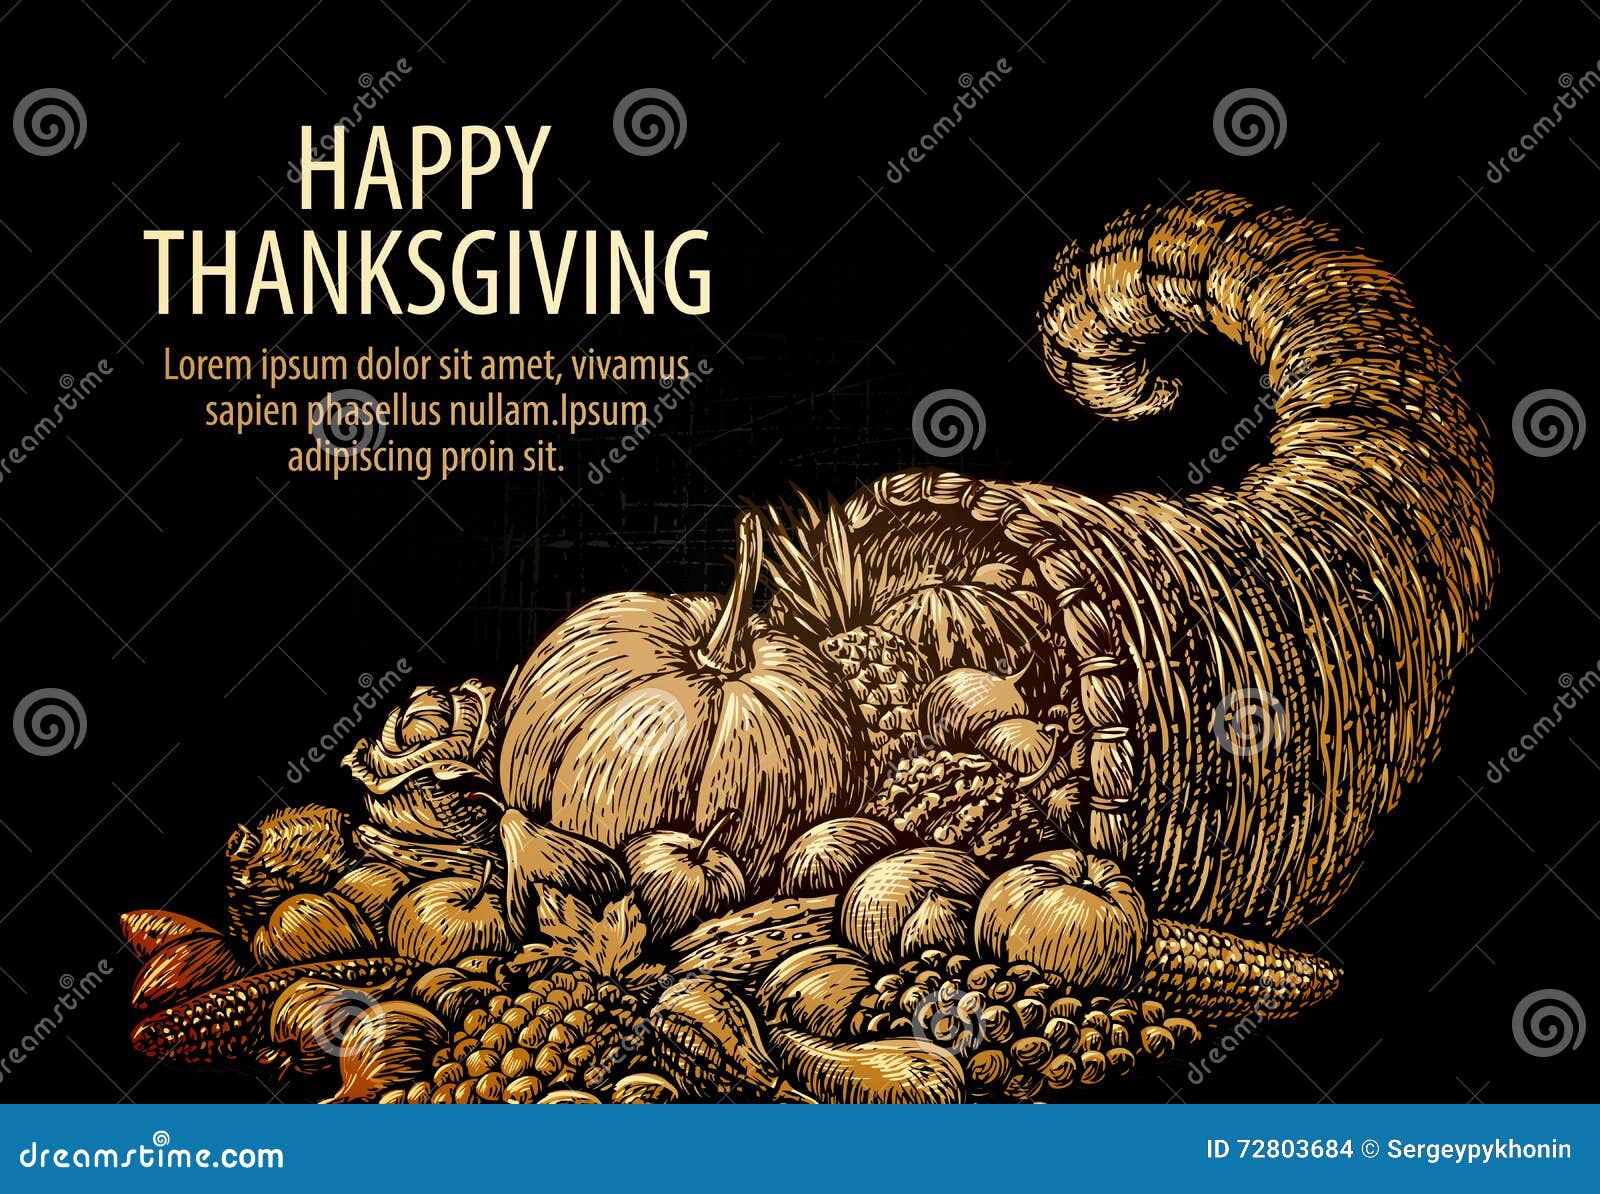 Happy Thanksgiving. Horn of Plenty. Cornucopia with Fruits and Vegetables  Stock Illustration - Illustration of autumn, celebration: 72803684